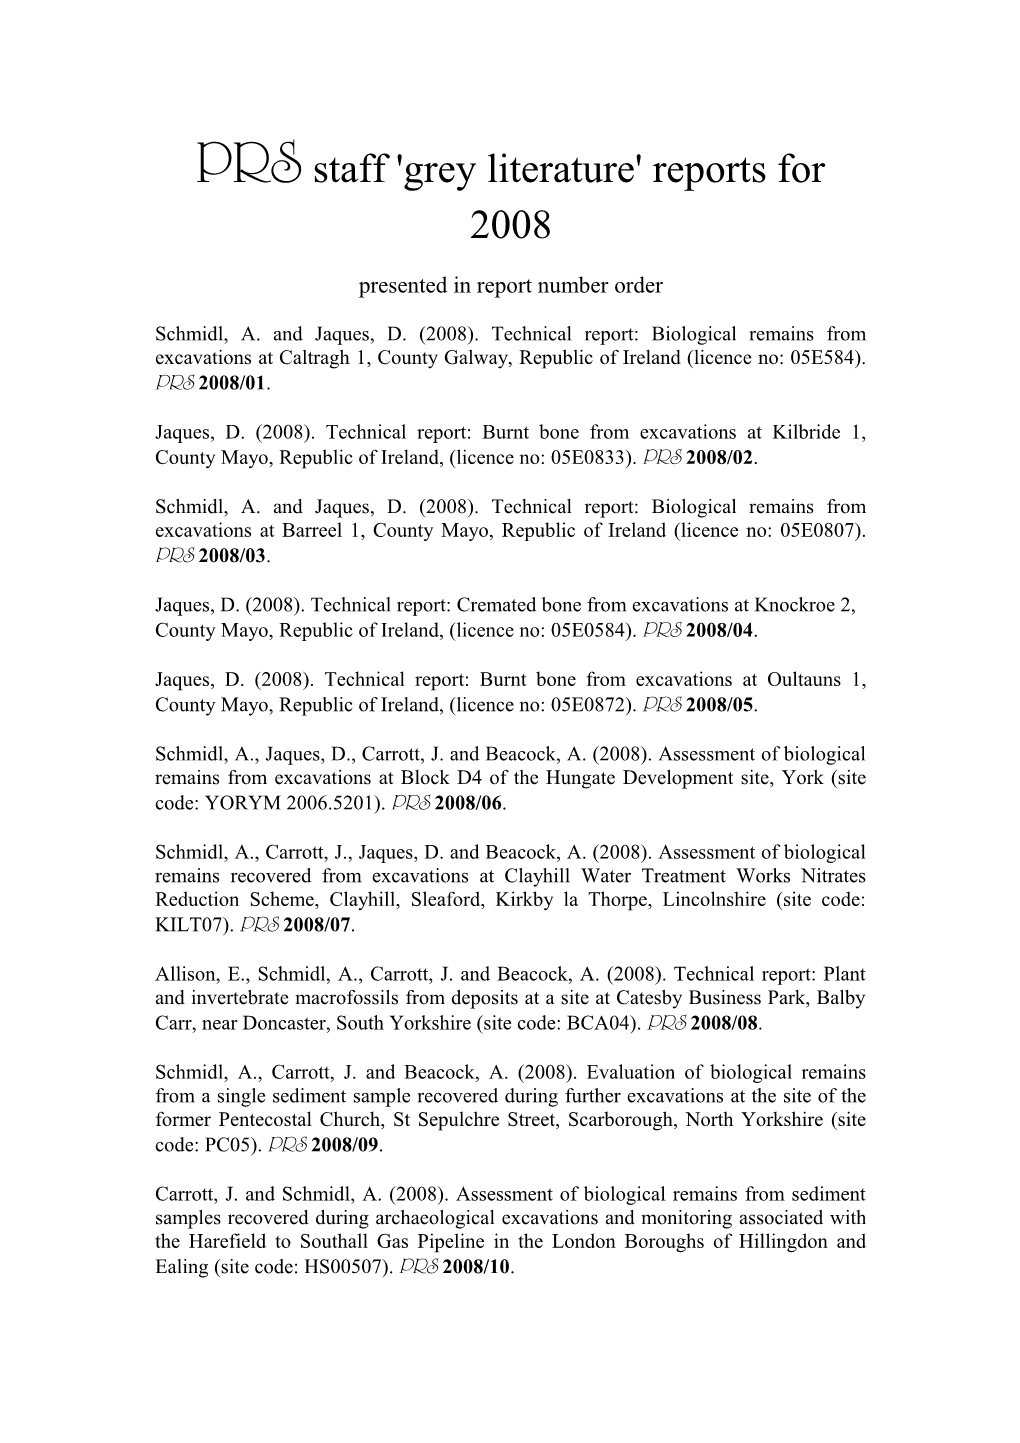 PRS Staff 'Grey Literature' Reports for 2008